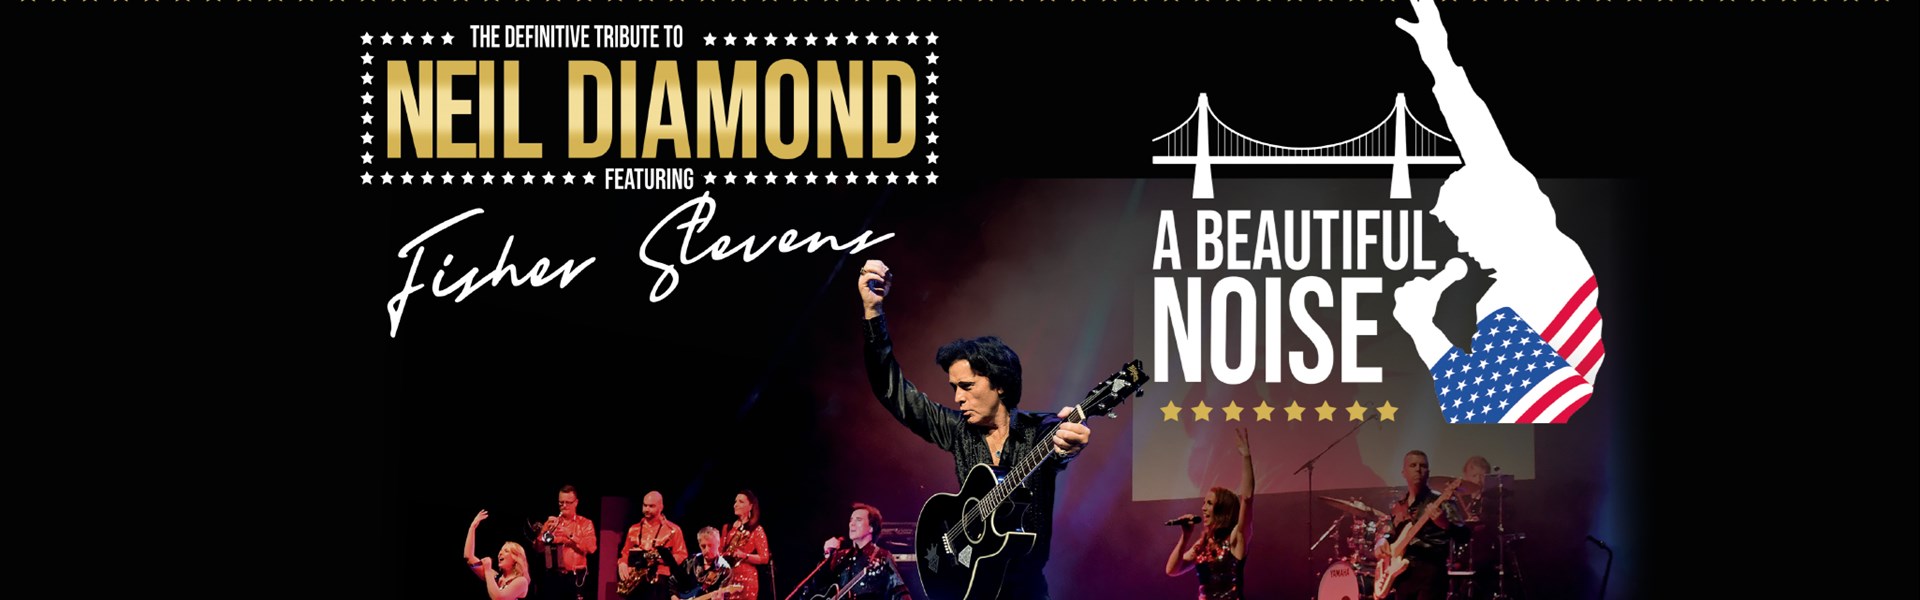 A Beautiful Noise - Neil Diamond Tribute